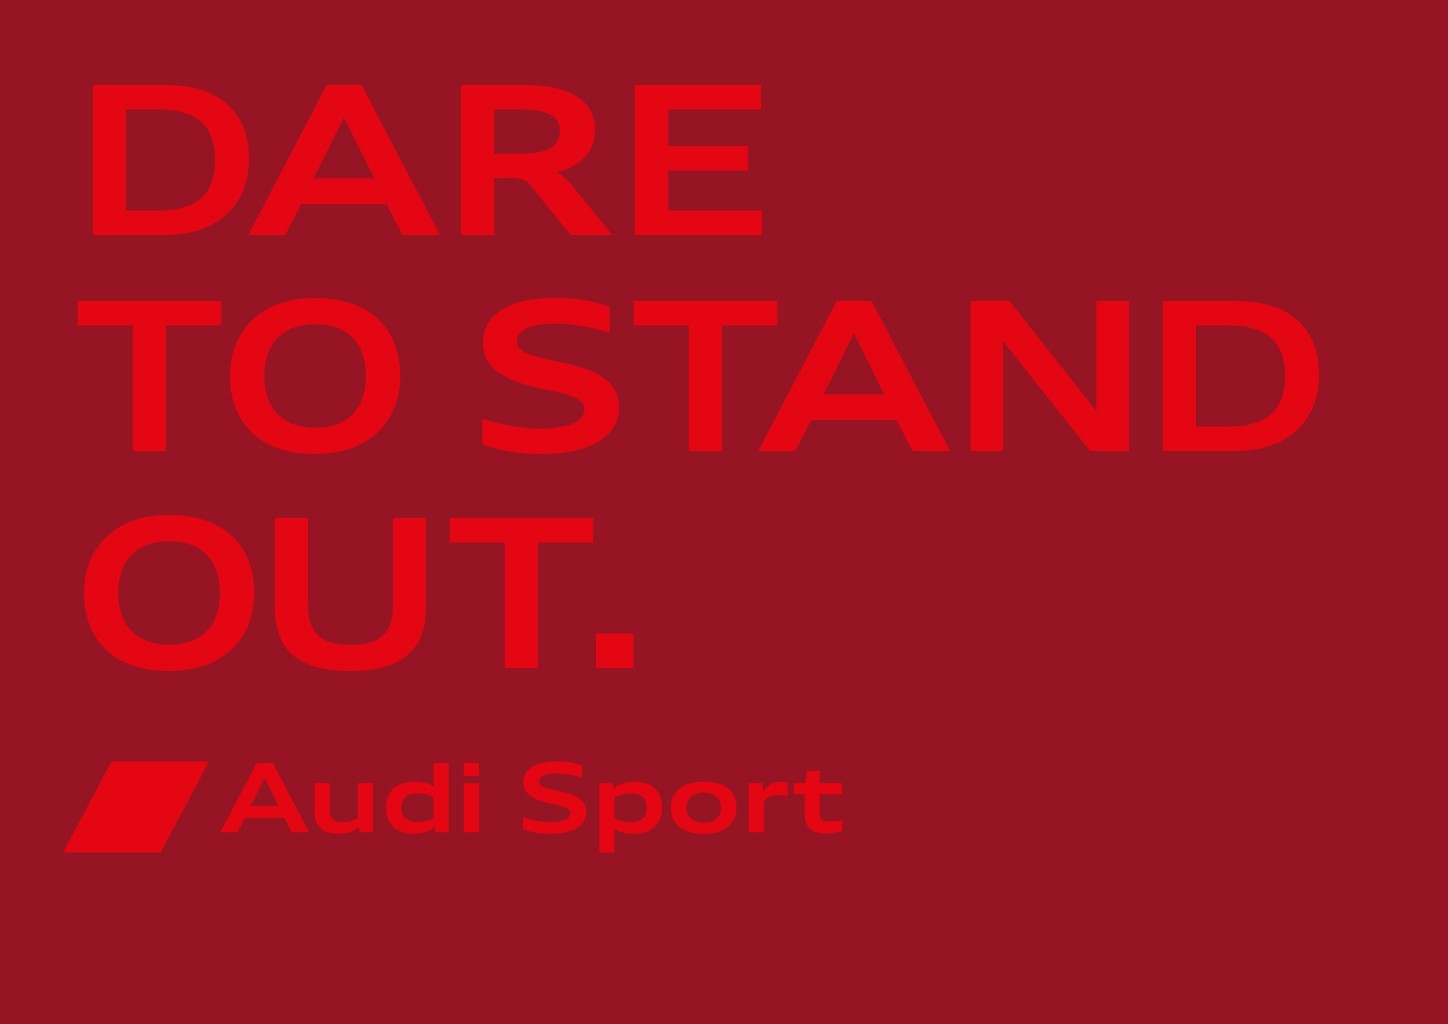 A statement against uniformity. The new Audi Sport corporate design